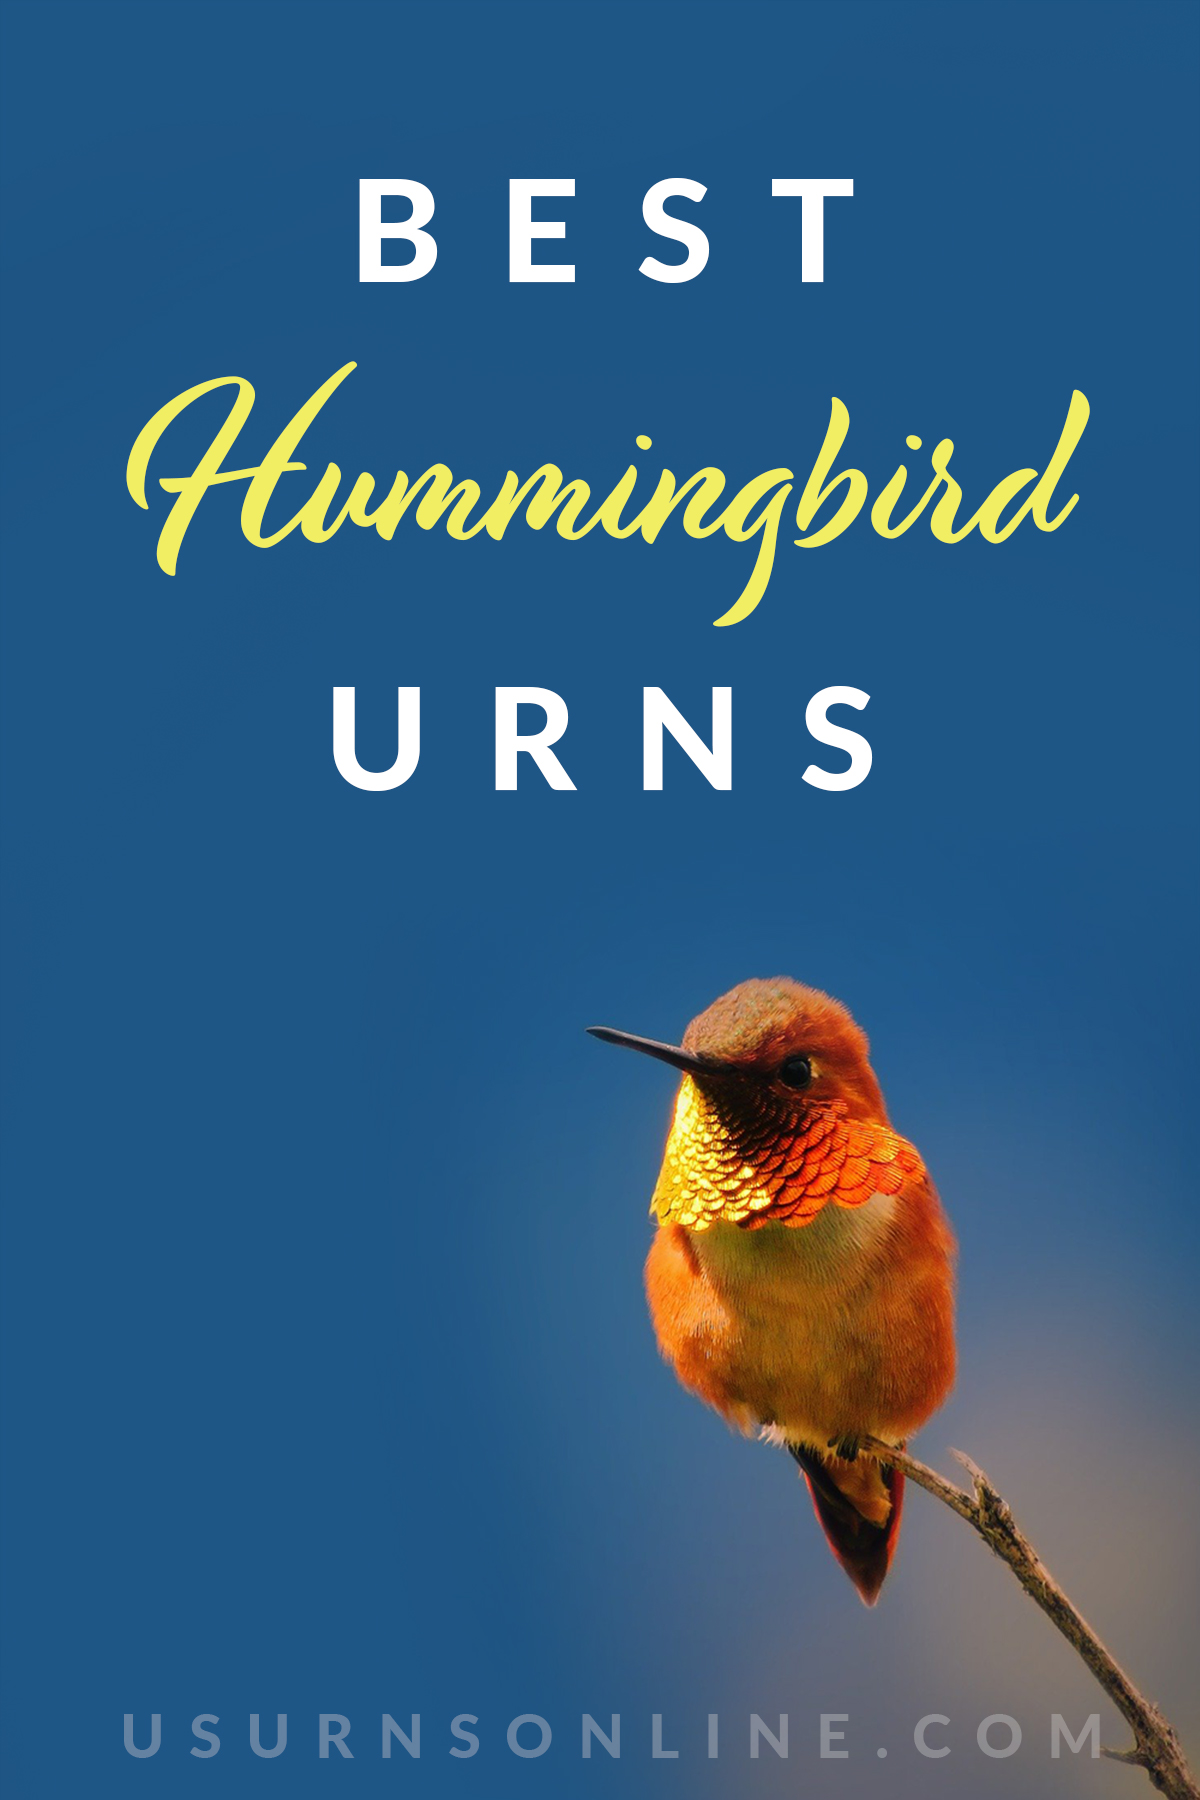 hummingbird cremation urns - Feature image